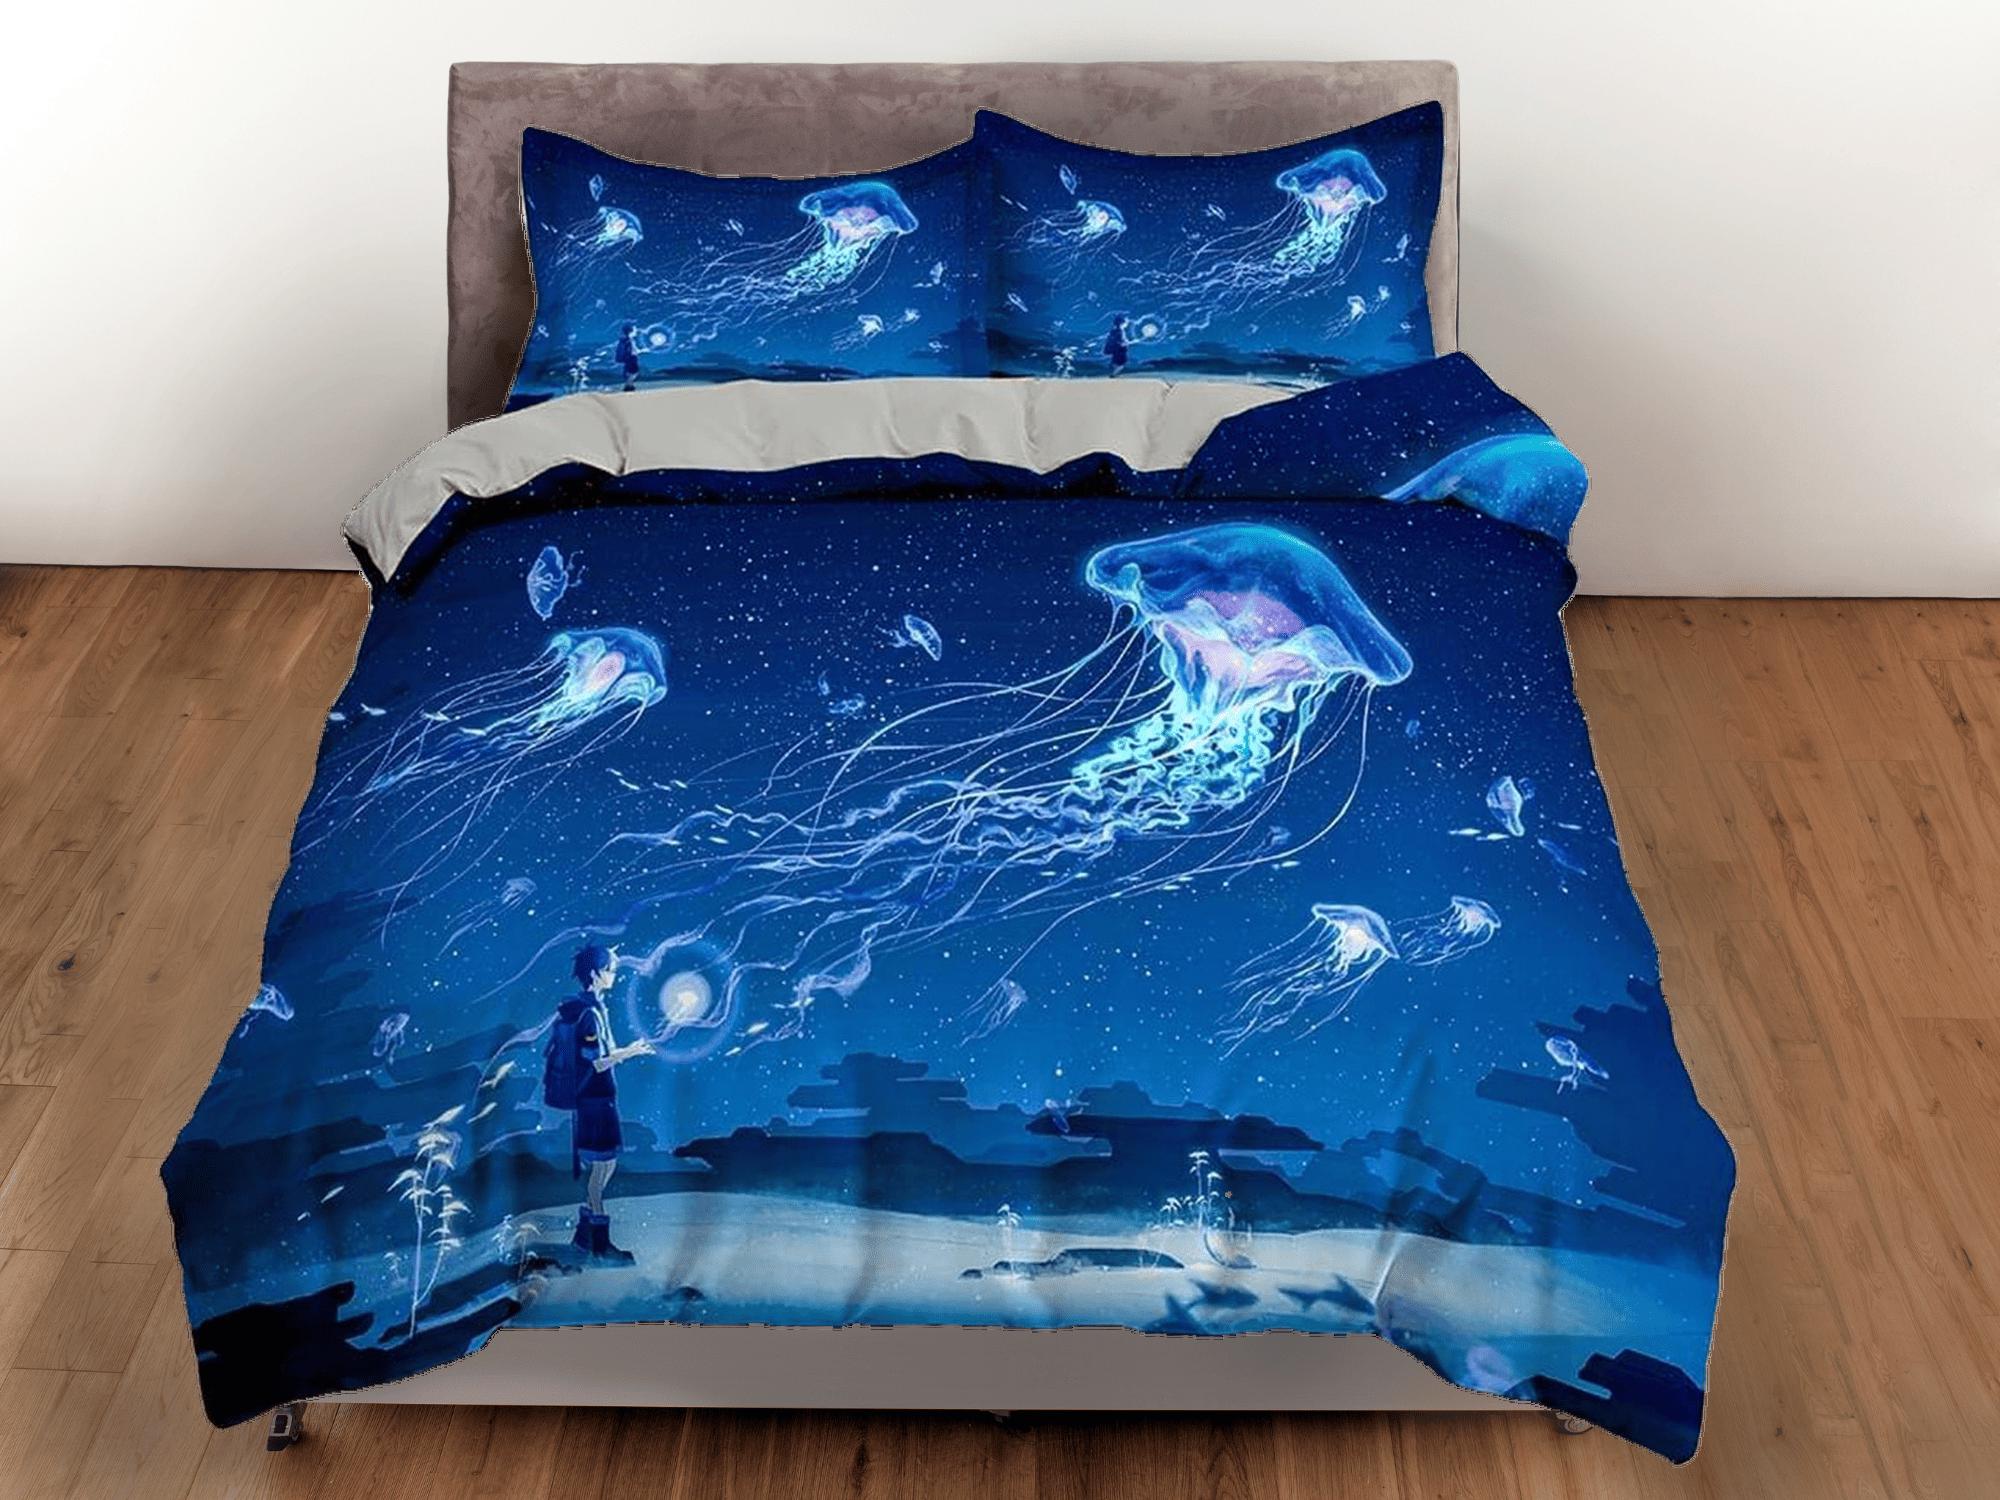 daintyduvet Magical jellyfish bedding blue duvet cover, ocean blush sea animal bedding set full king queen twin crib toddler, college dorm bedding gift